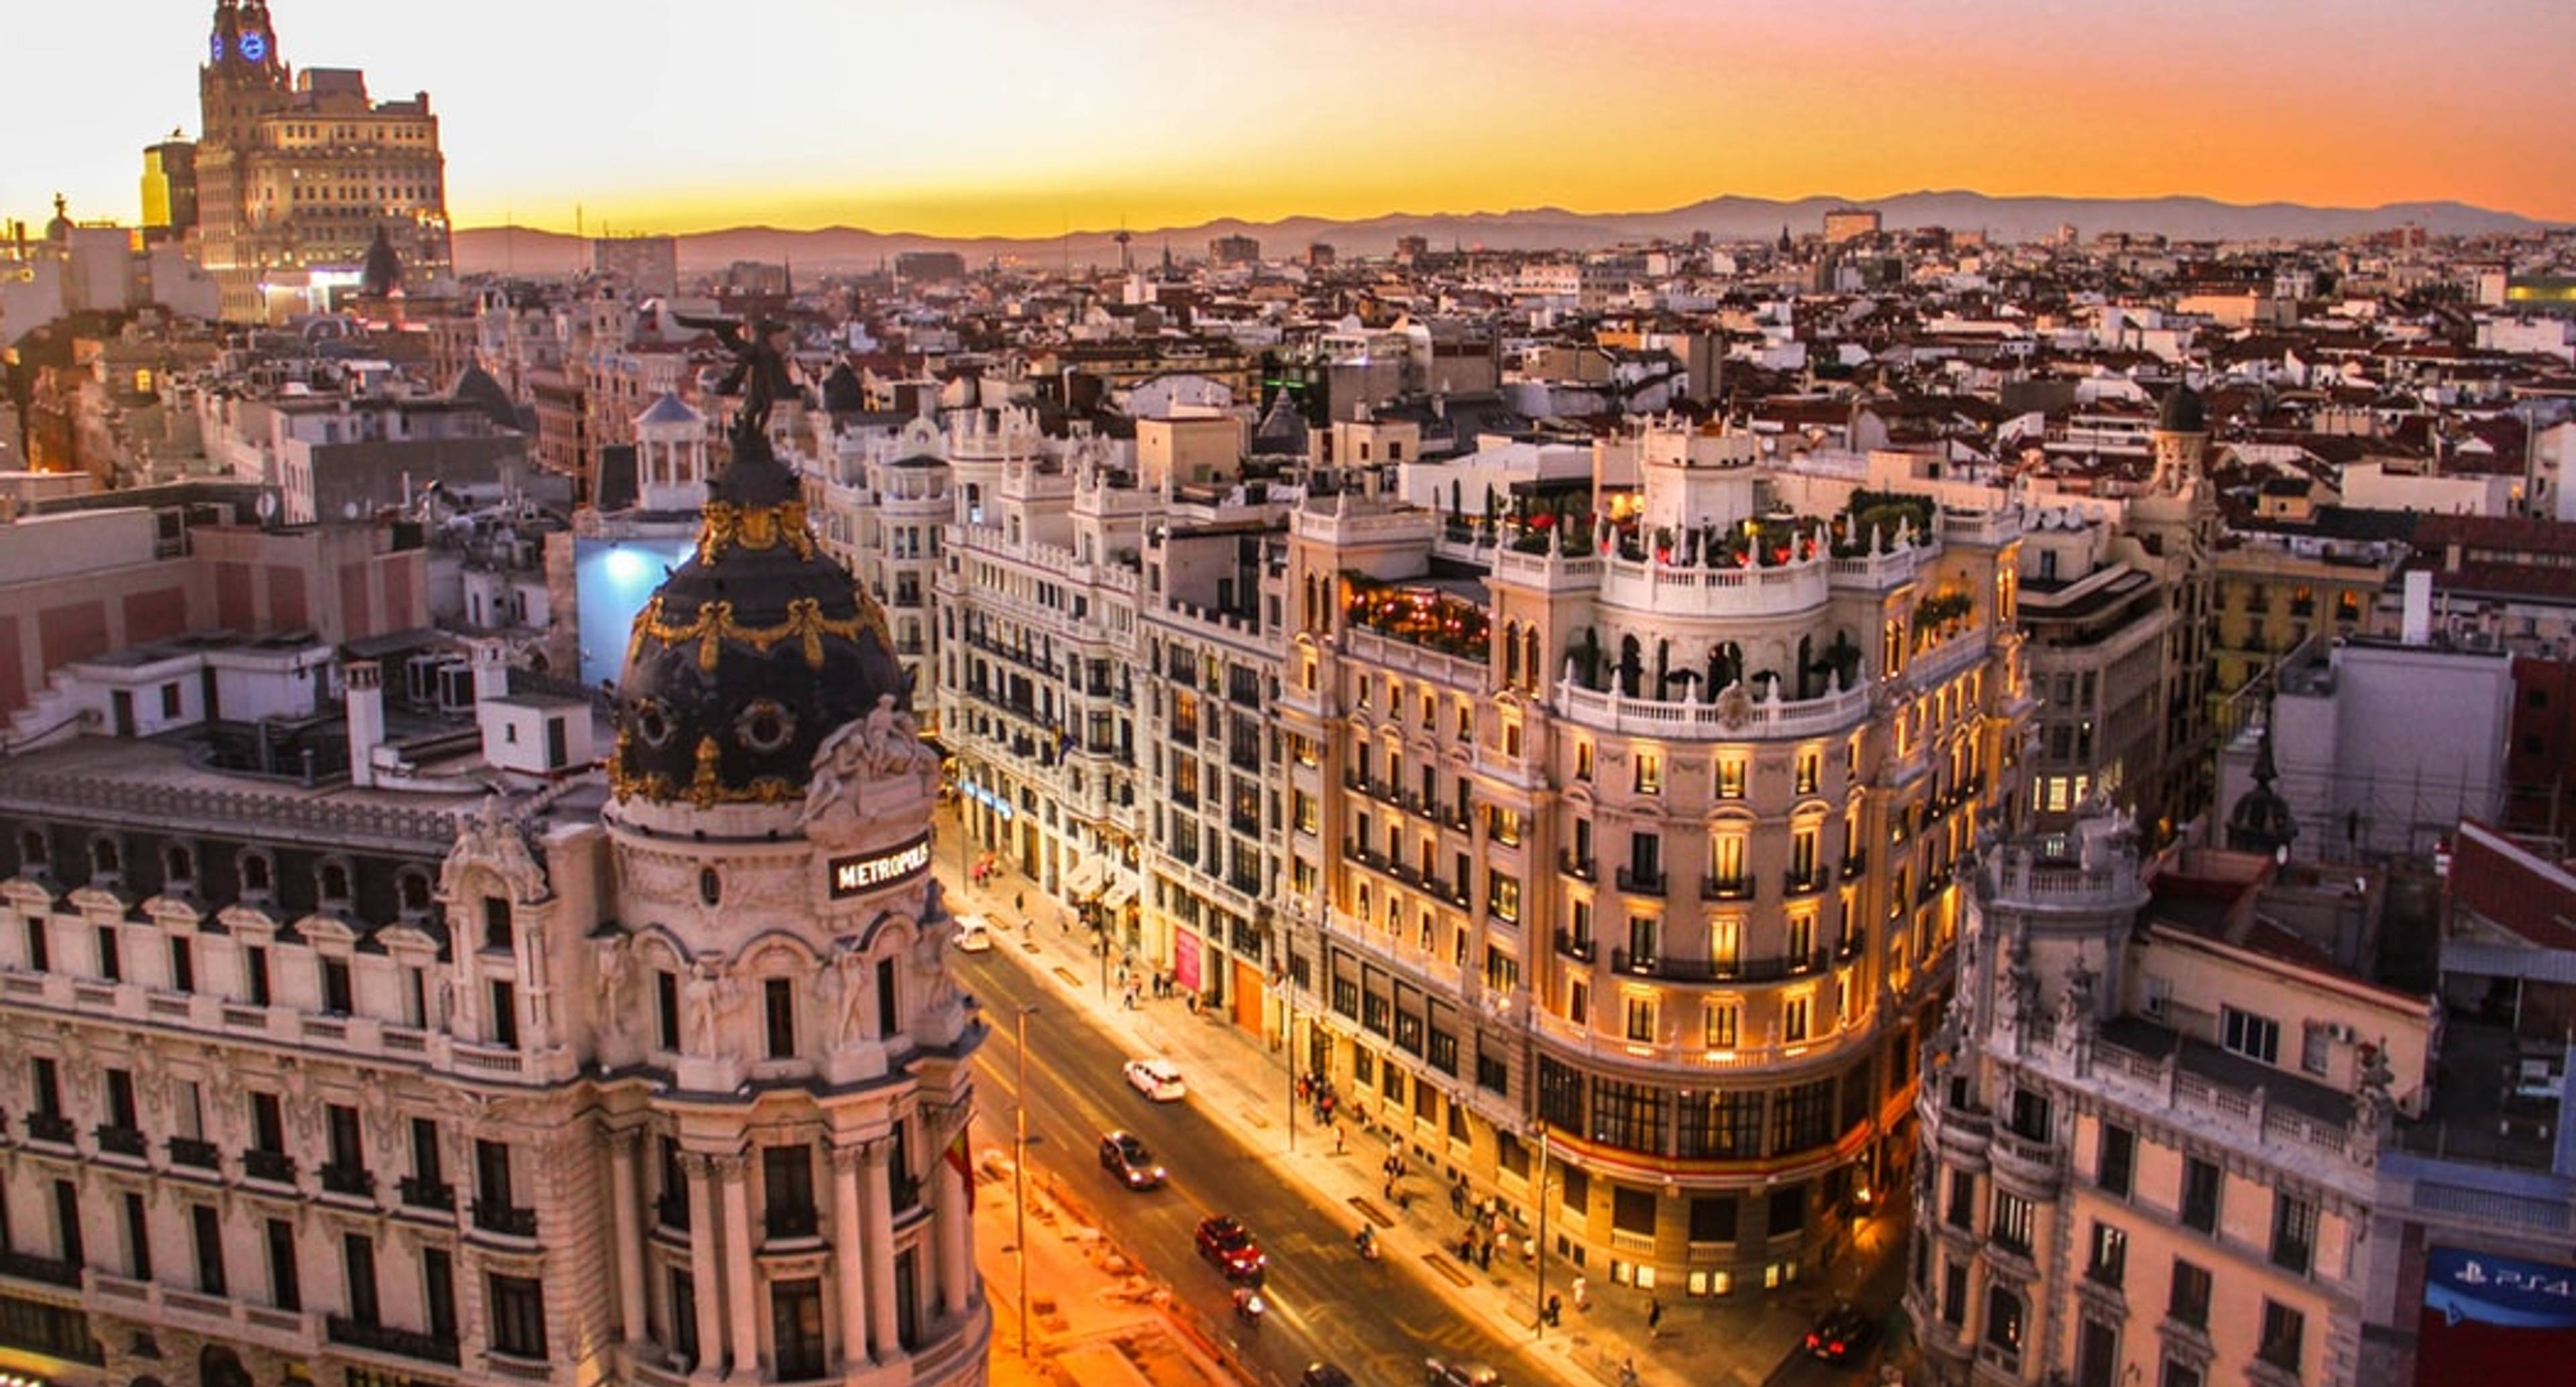 Spain's colorful capital